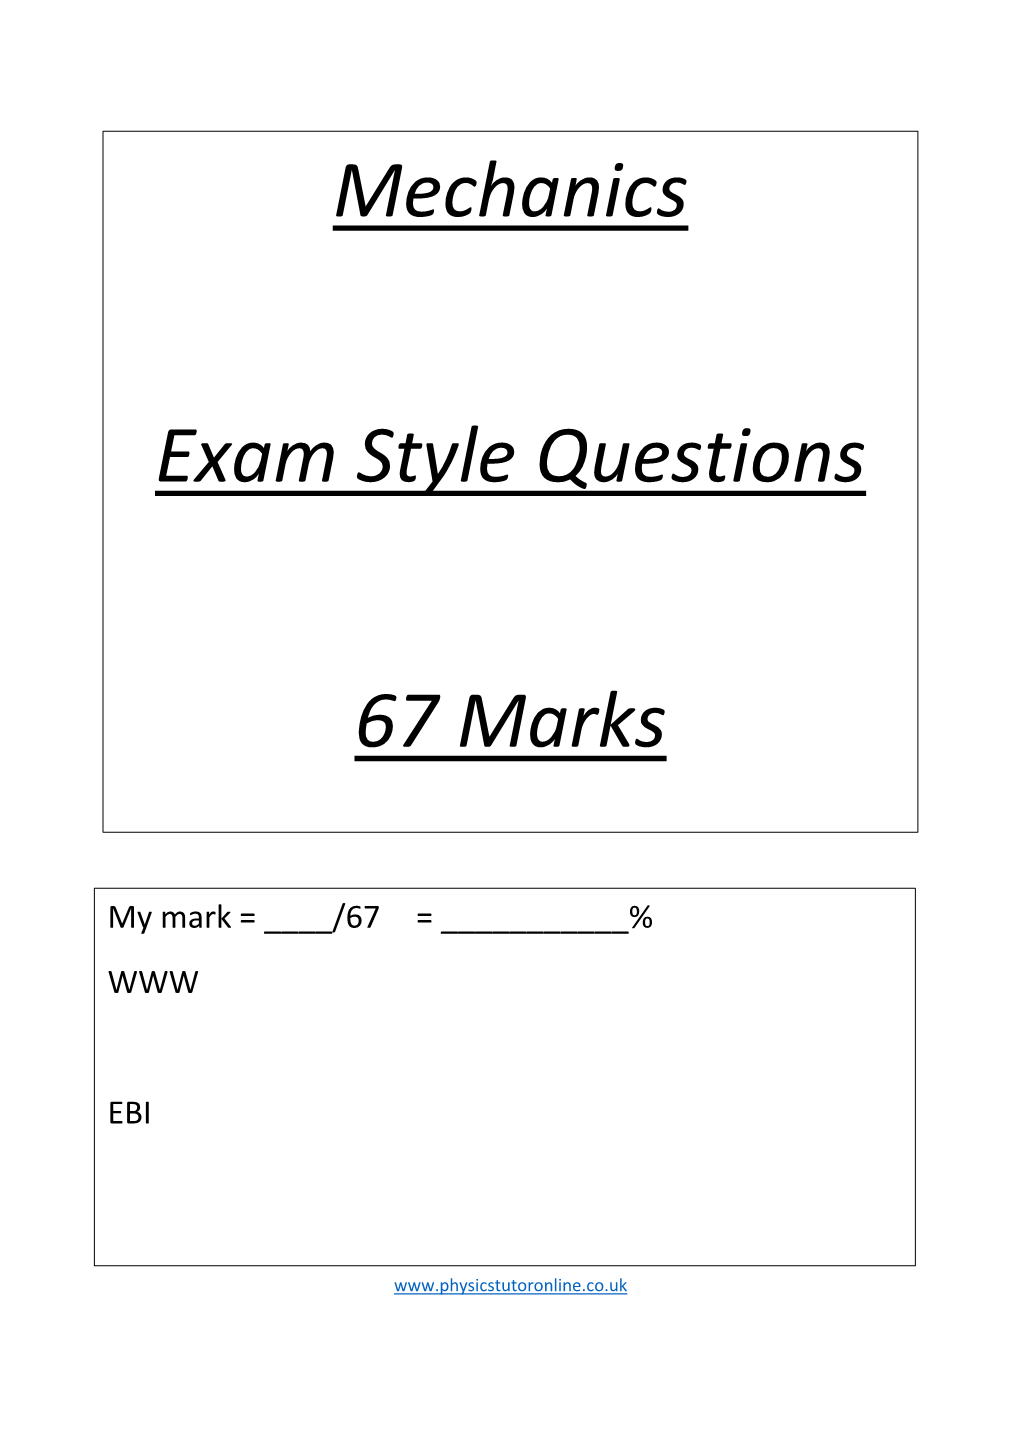 Mechanics Exam Style Questions 67 Marks